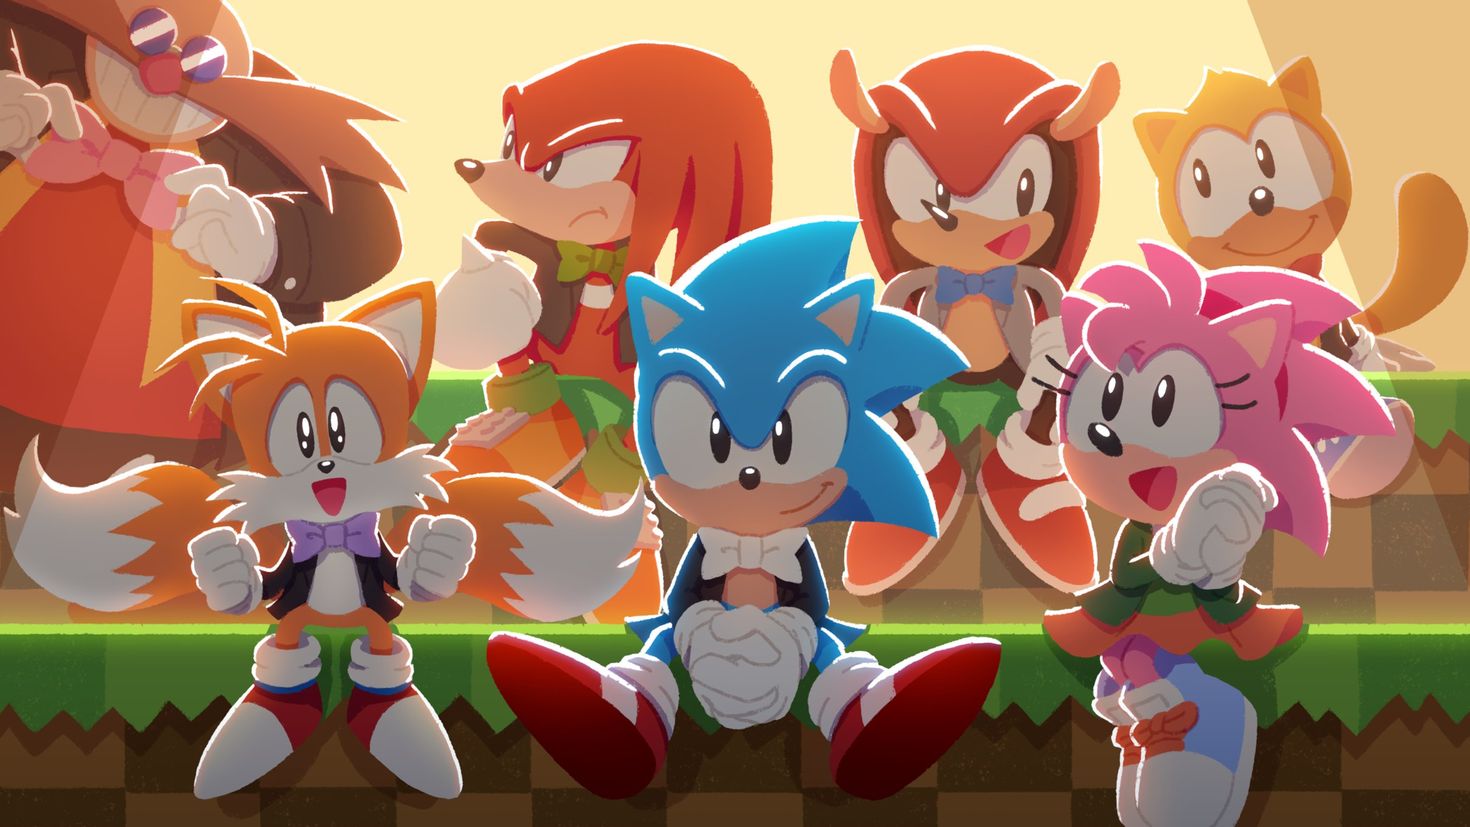 Sonic 30th Anniversary